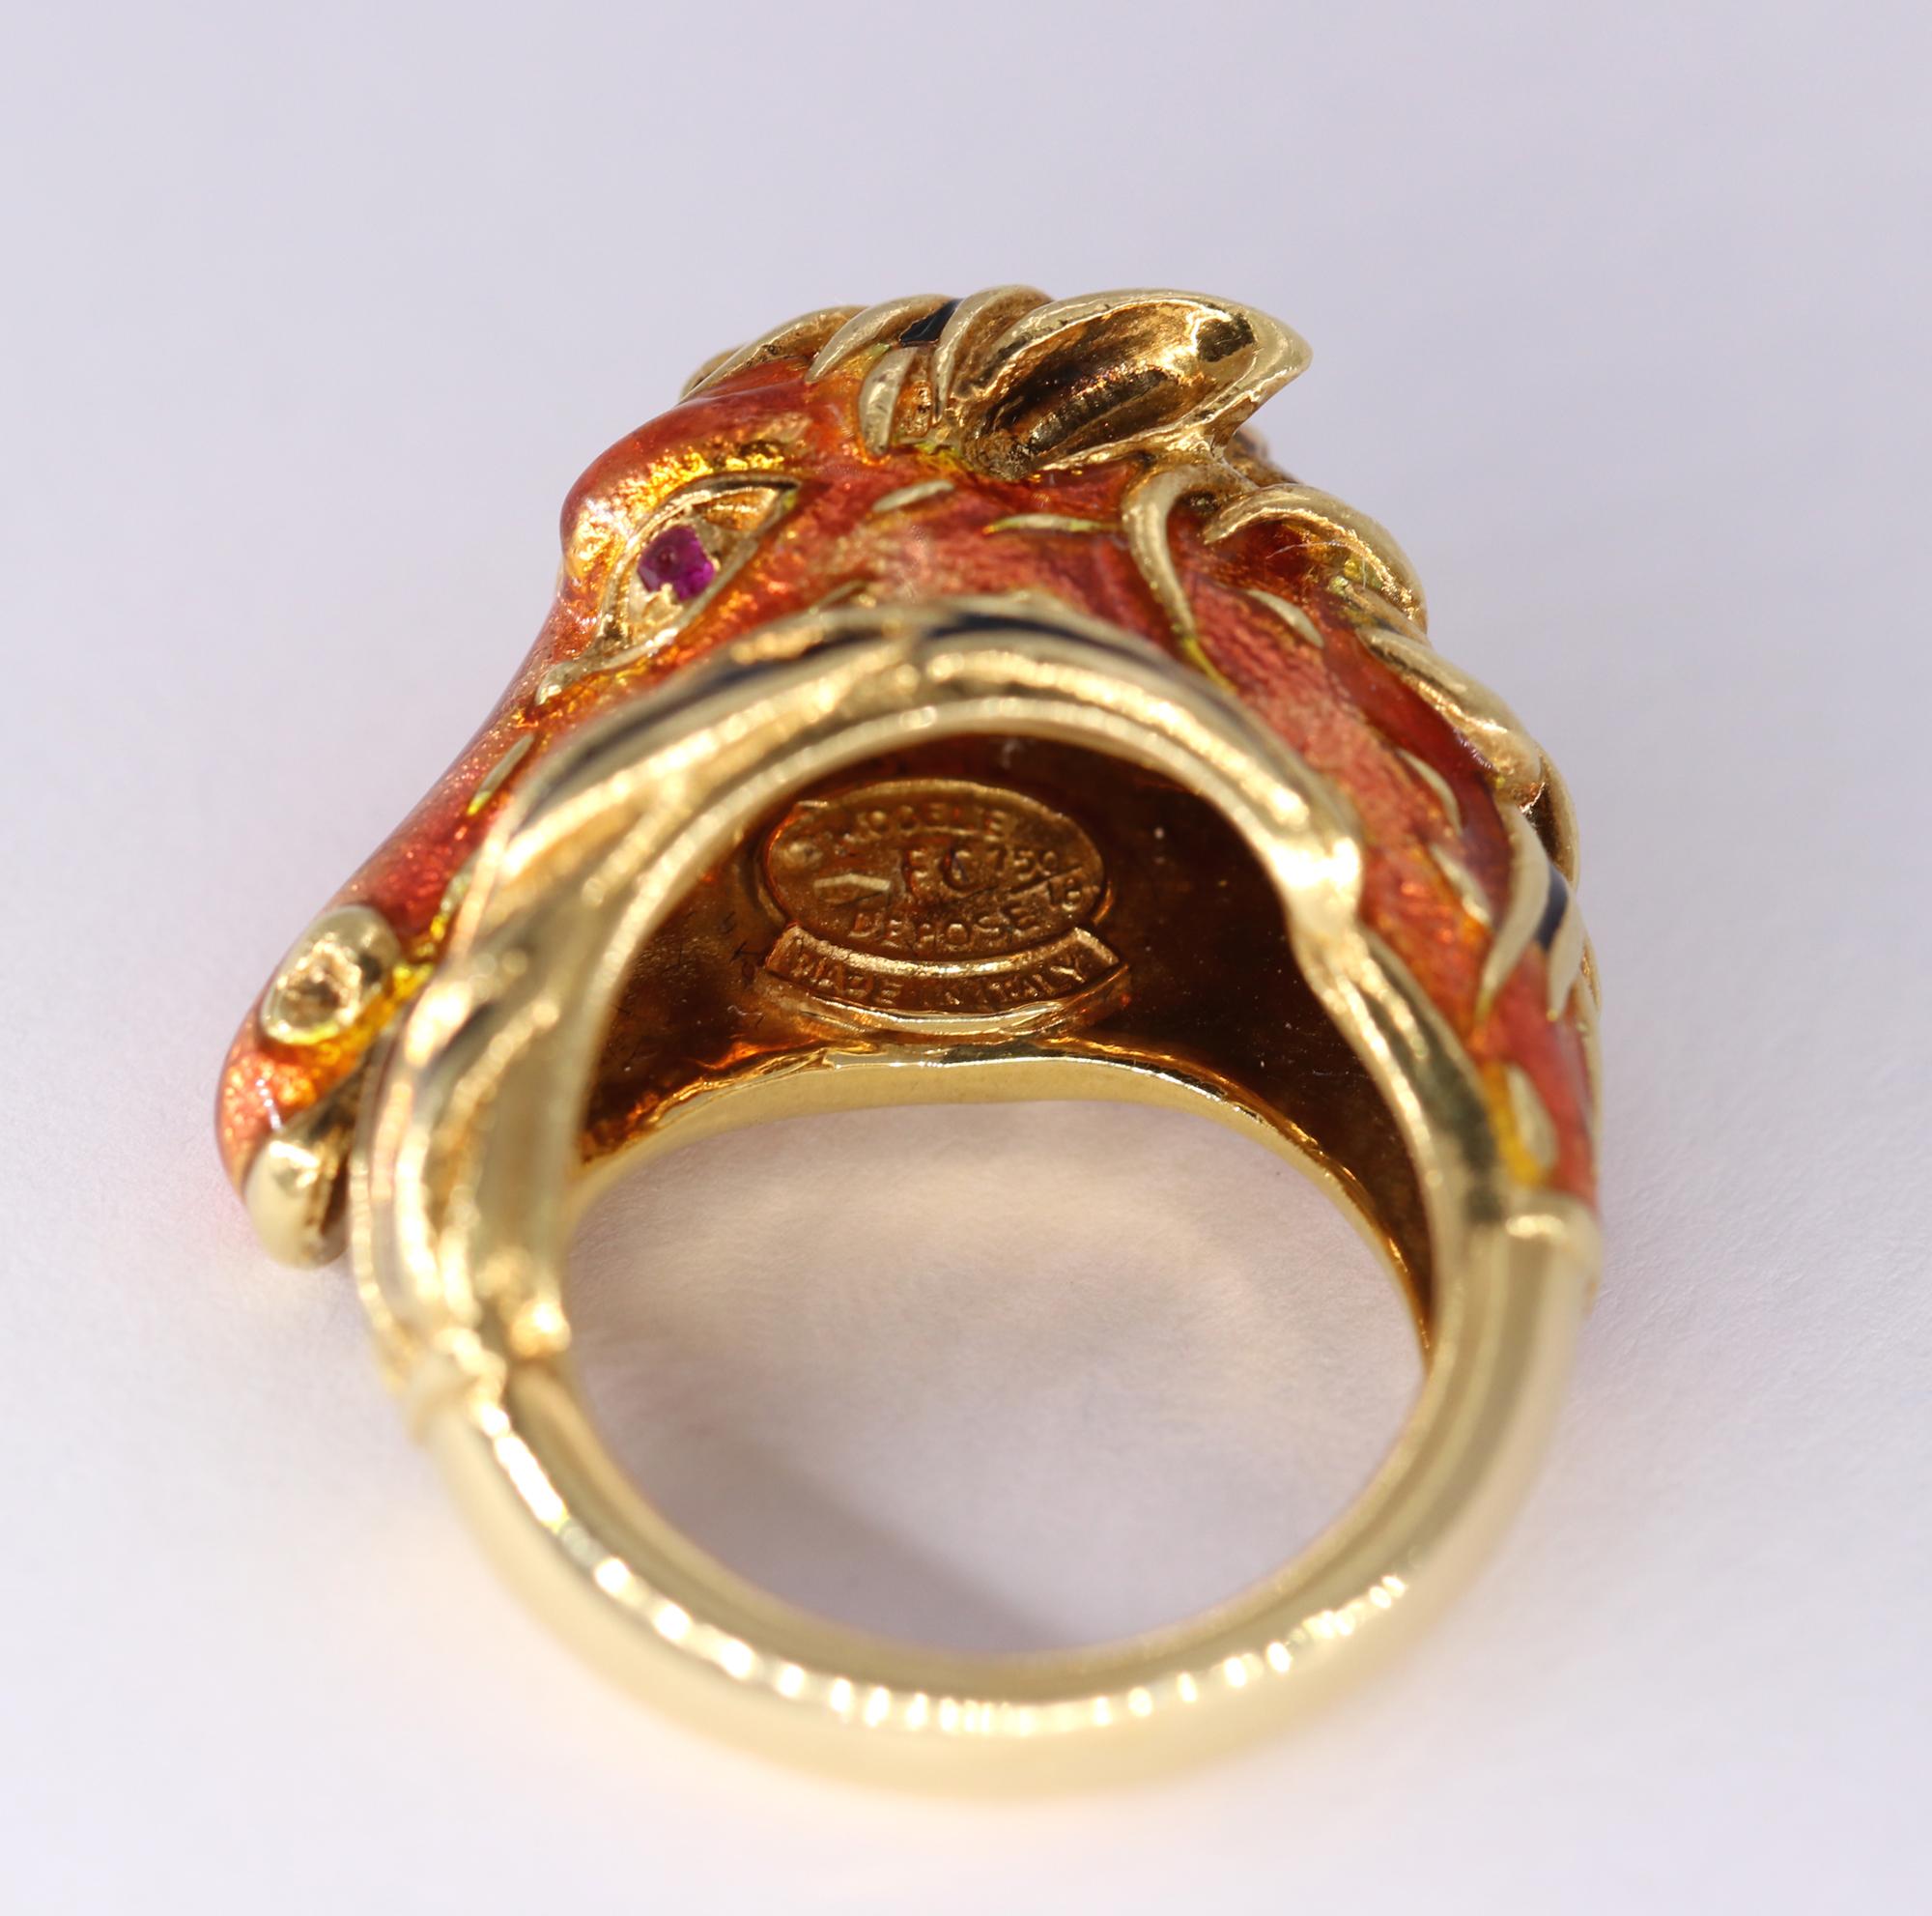 Detailed Enamel Horse Ring by Frascarolo with Ruby Eyes 3